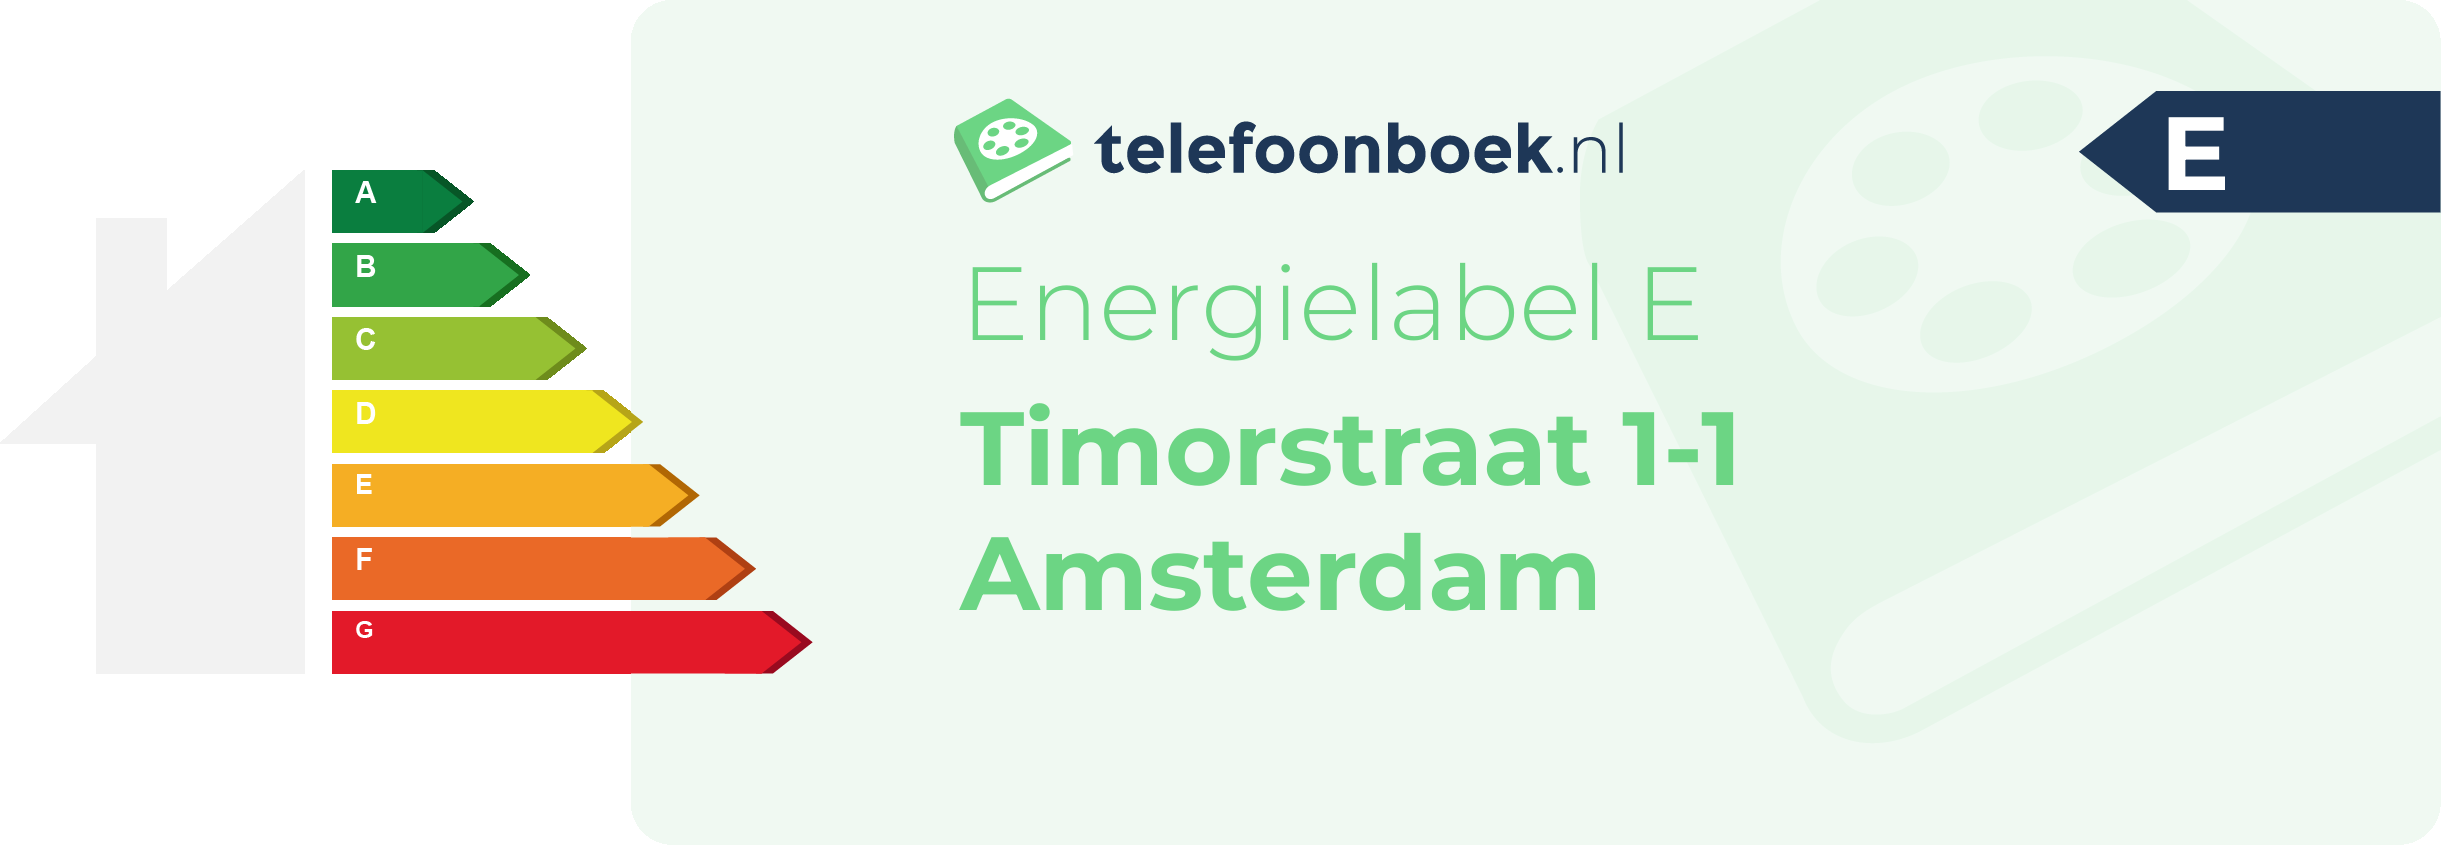 Energielabel Timorstraat 1-1 Amsterdam